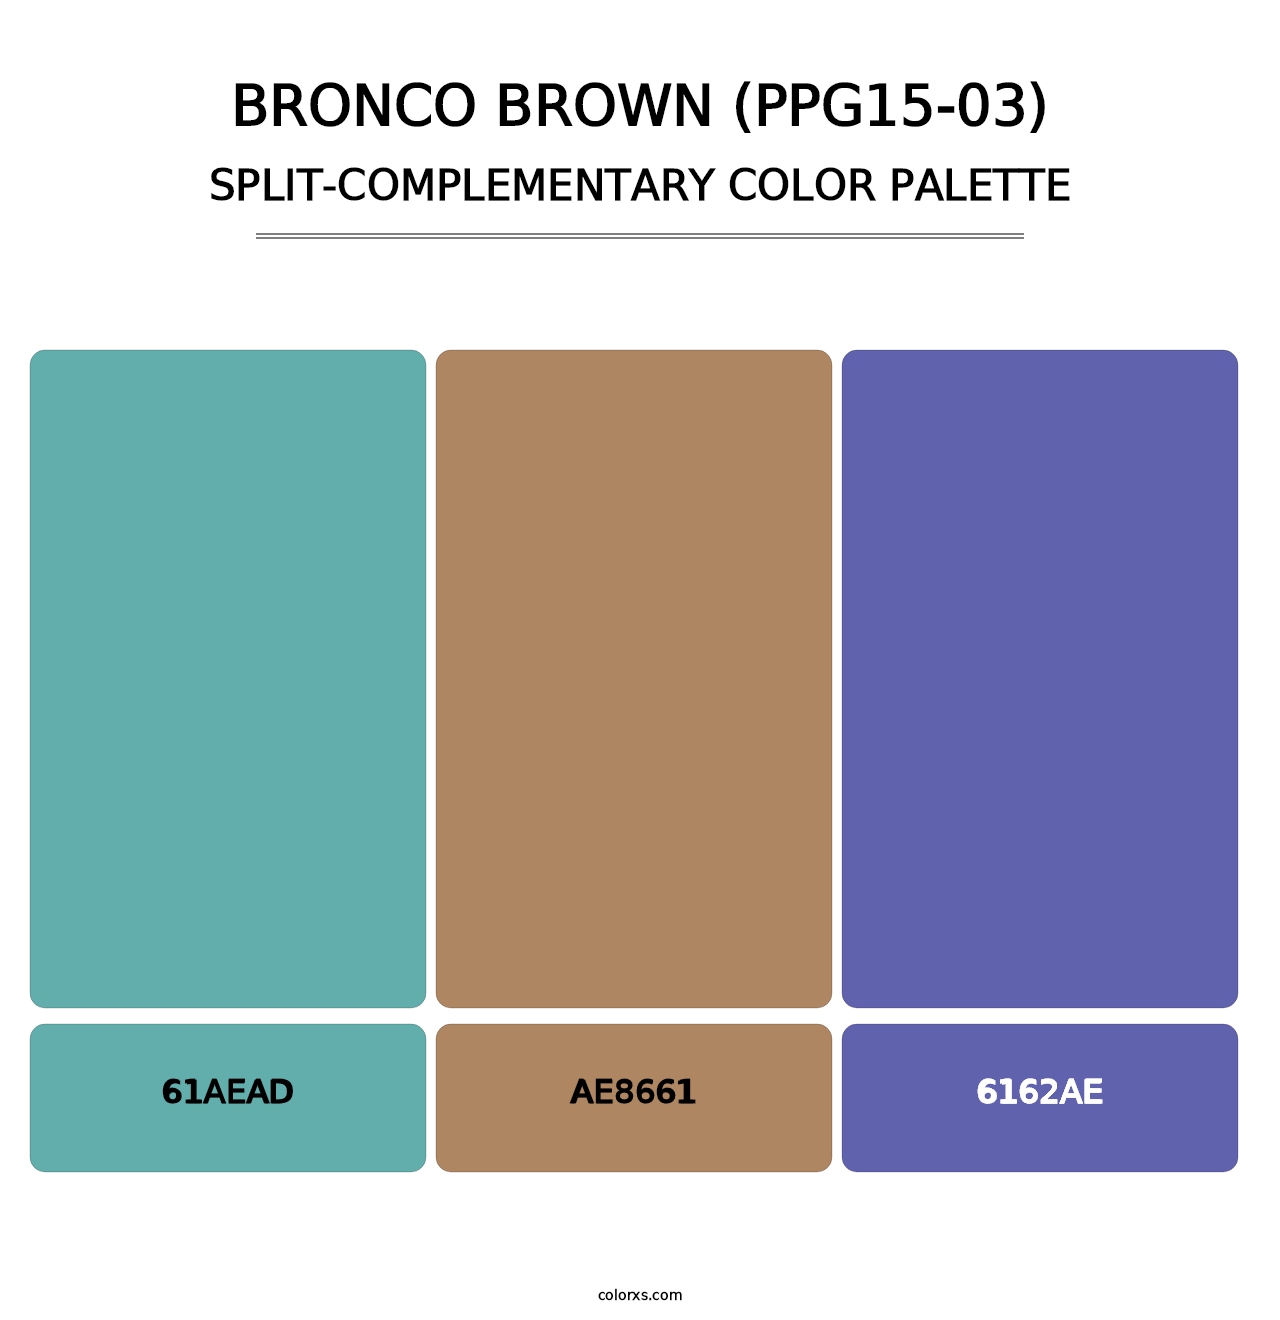 Bronco Brown (PPG15-03) - Split-Complementary Color Palette